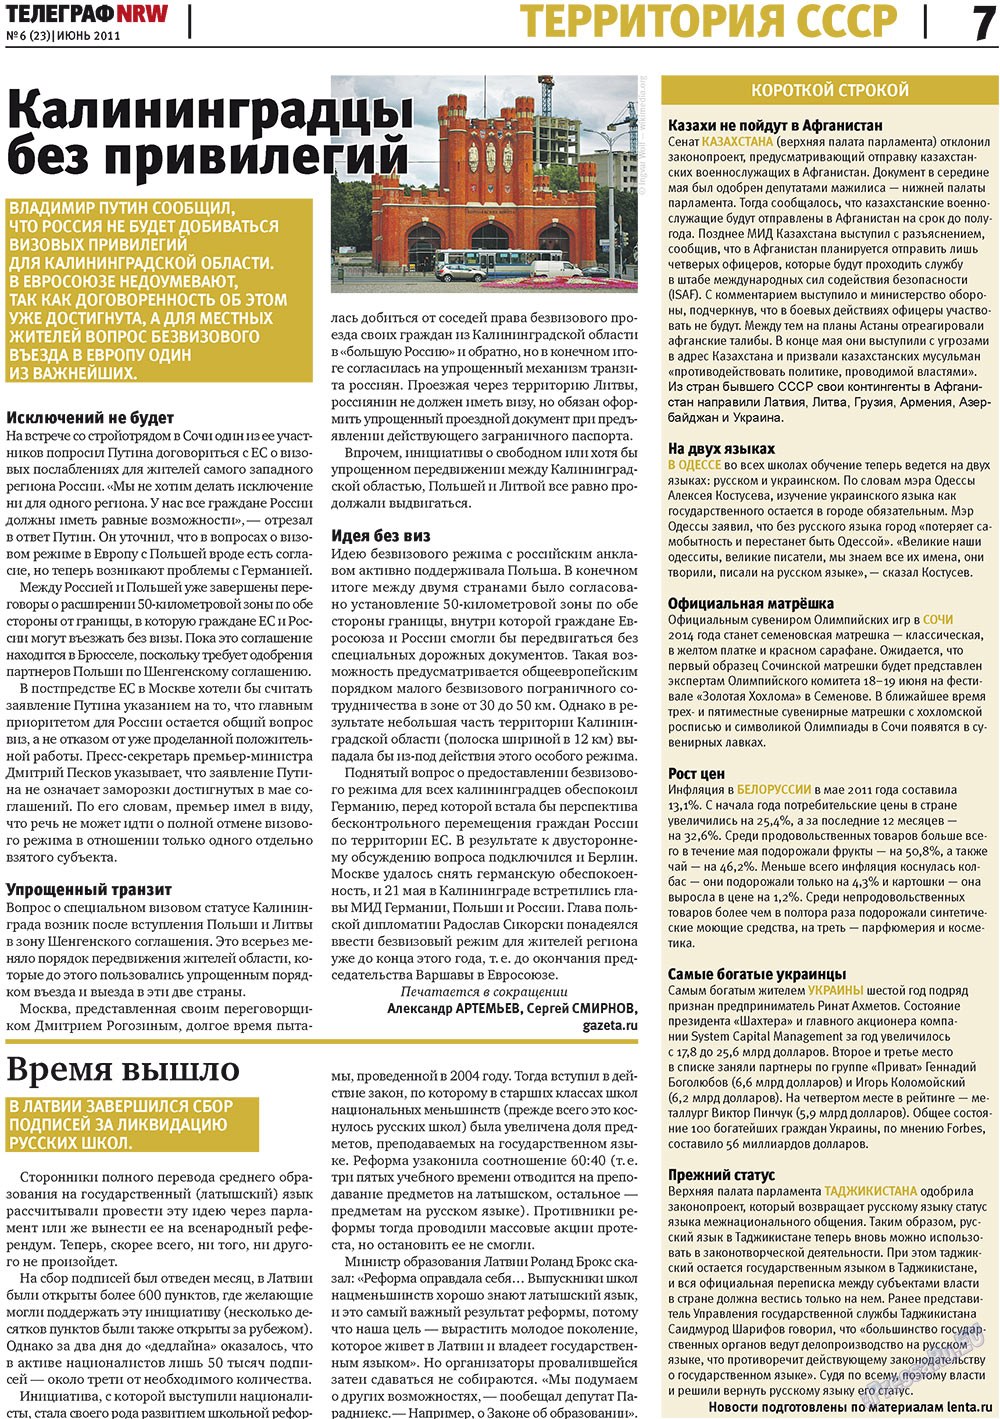 Телеграф NRW, газета. 2011 №6 стр.7